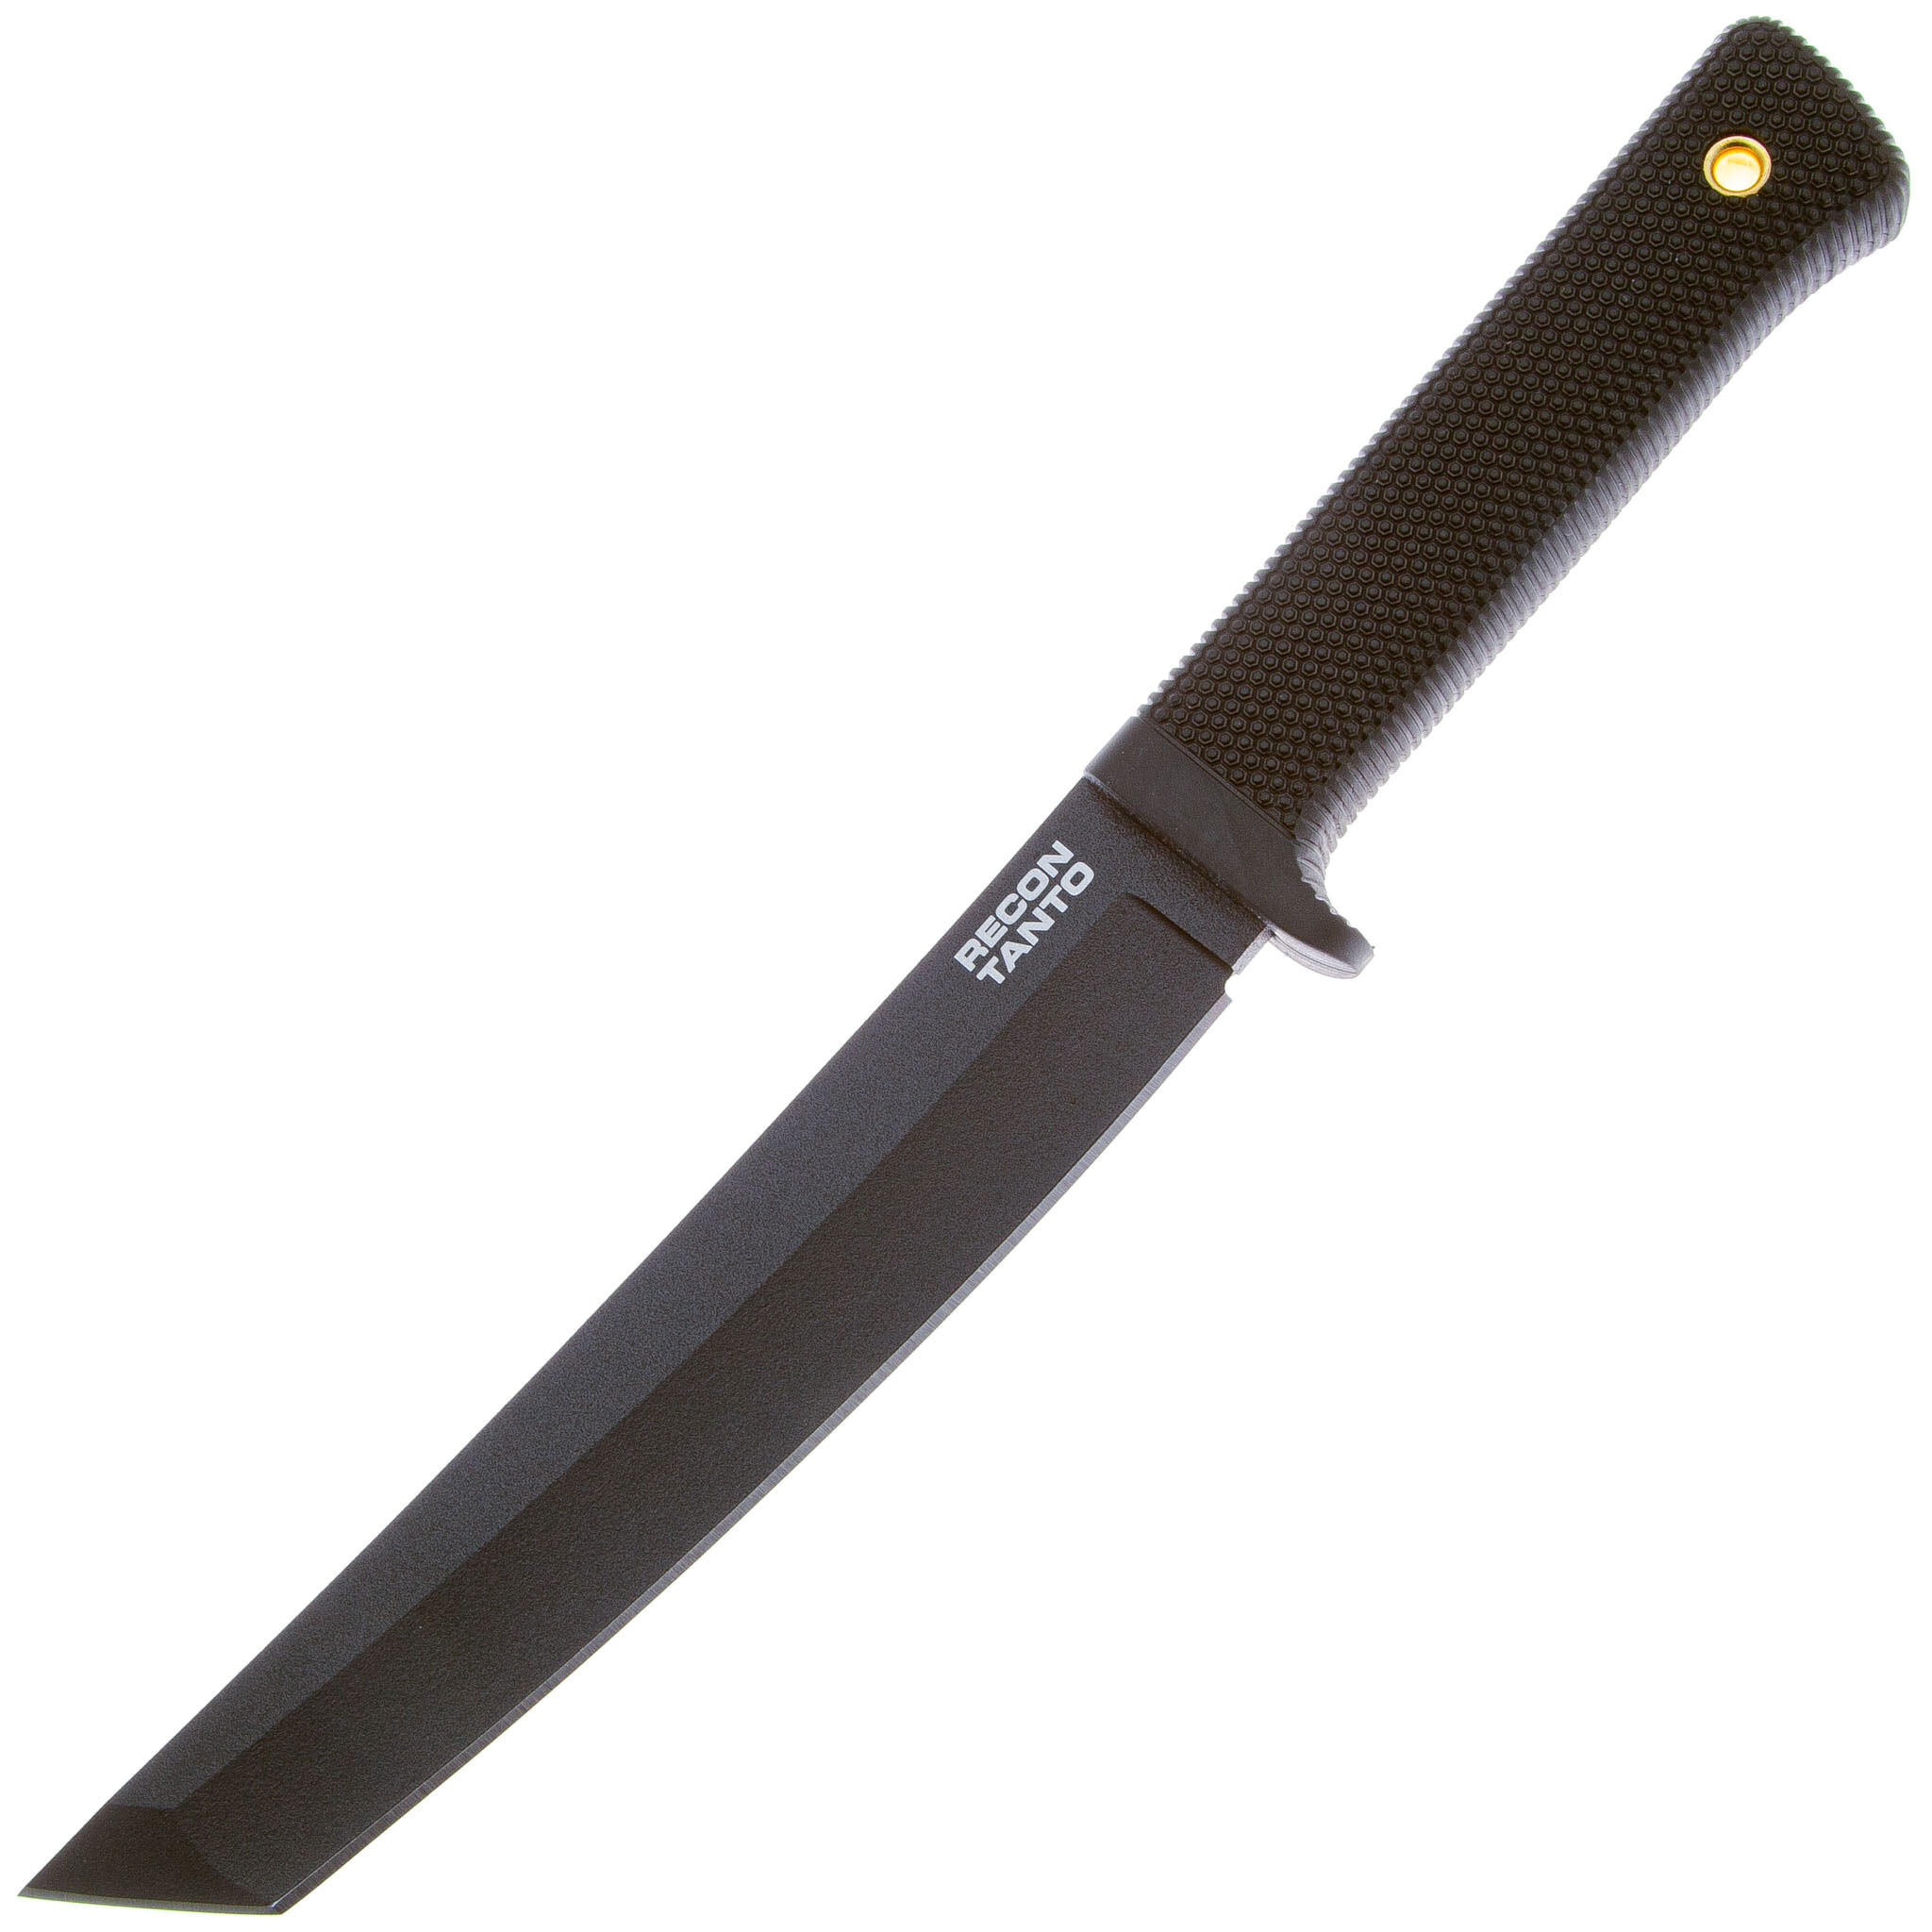 Нож с фиксированным клинком Cold Steel Recon Tanto, сталь SK-5, рукоять резина, black нож складной cold steel mini recon 1 tanto сталь aus 10a рукоять термопластик grn black